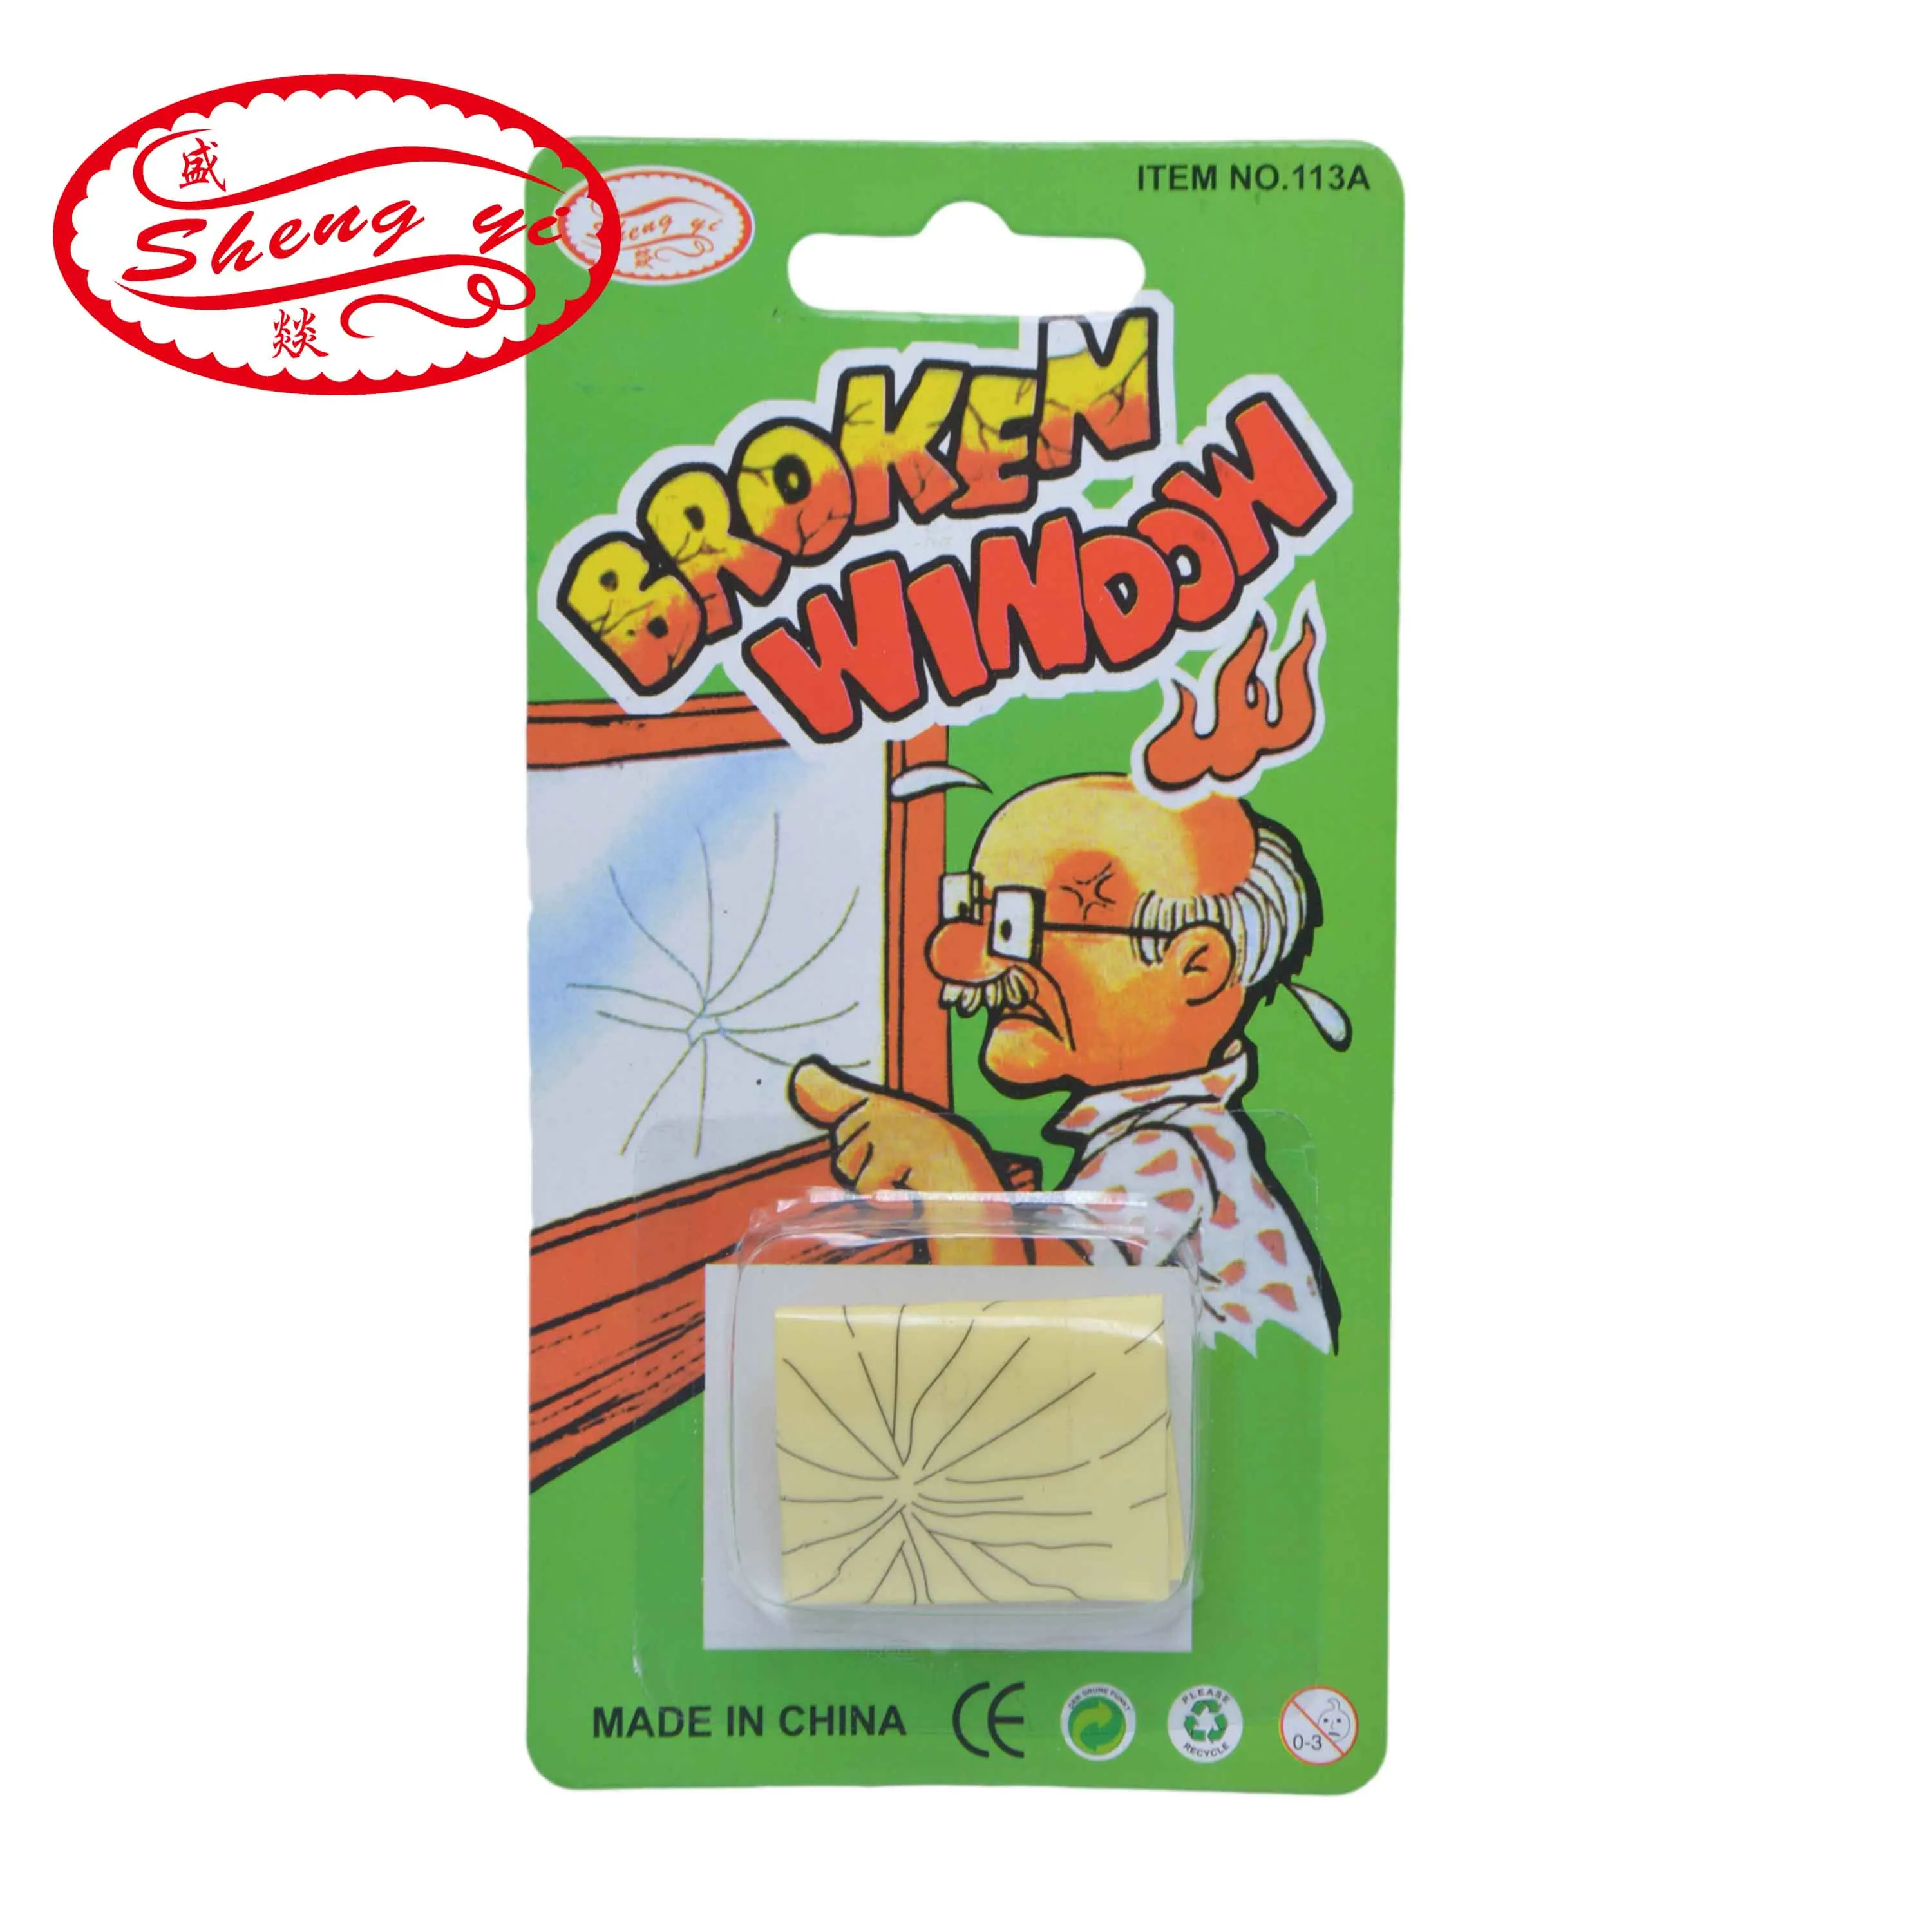 

SHENGYI 1Pcs Broken Window Stickers Funny Tricky Joking Toys April Fool's Day Gift Prank Broken Glass Sticker